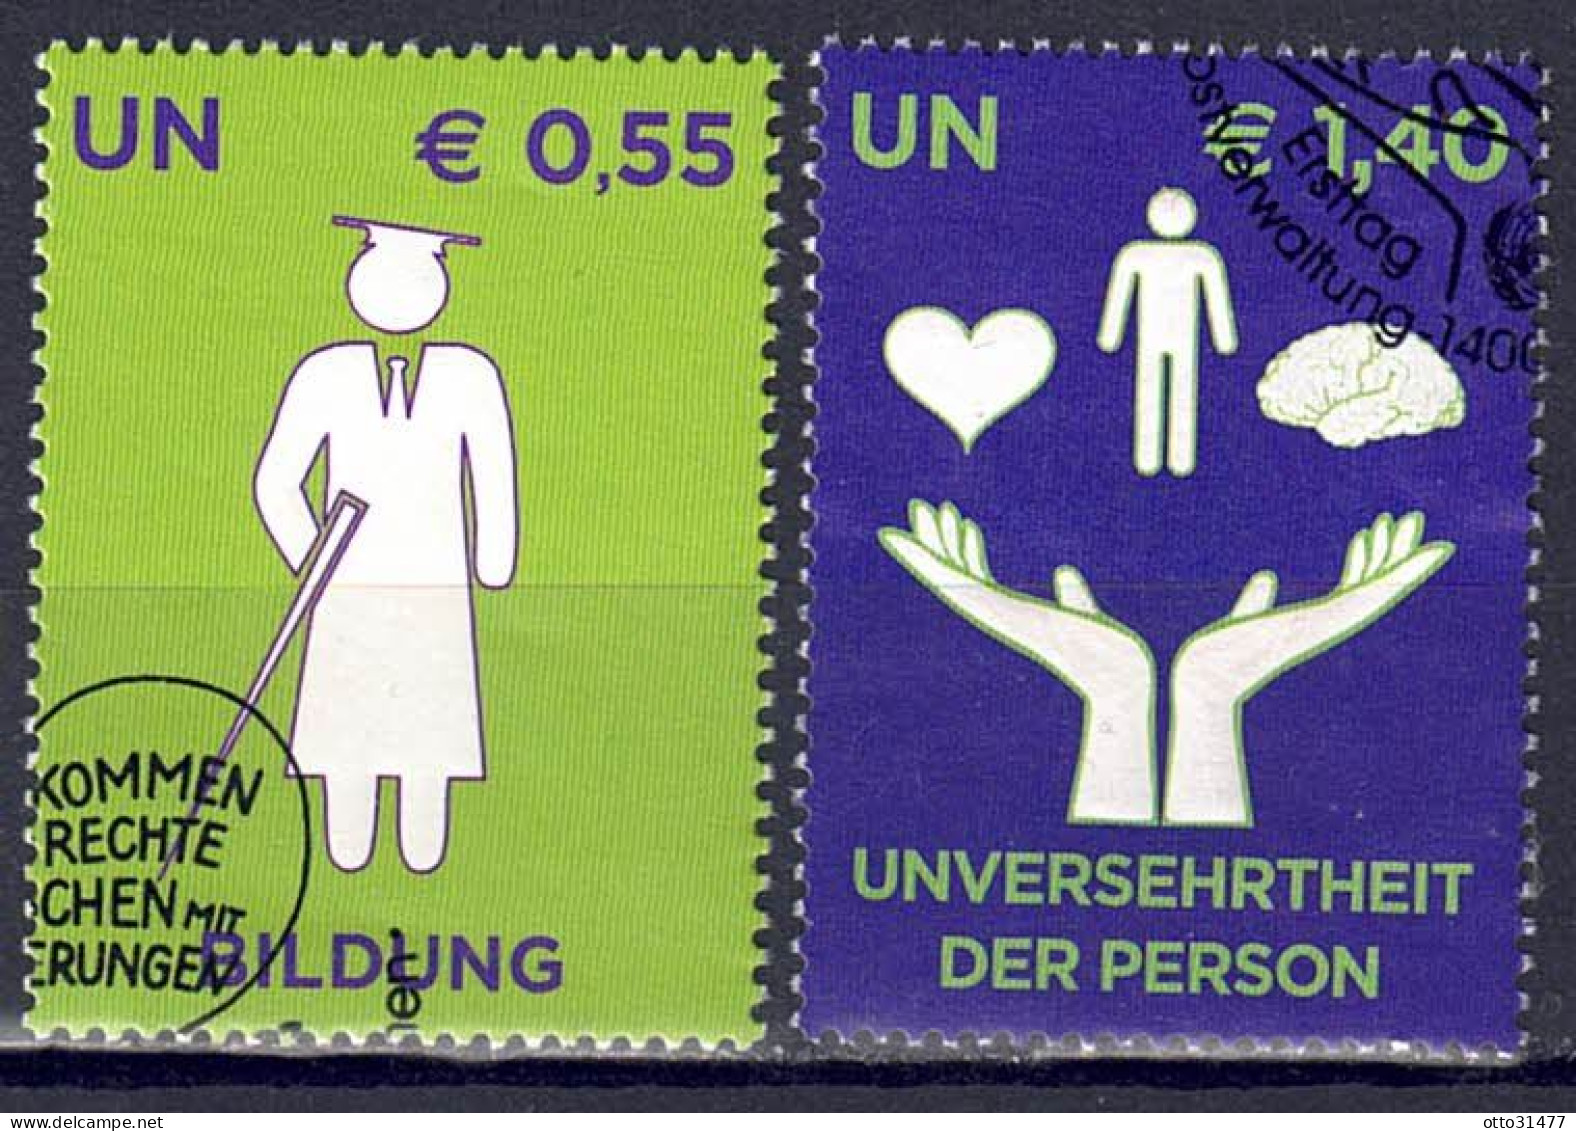 UNO Wien 2008 - Menschenrechte, Nr. 543 - 544, Gestempelt / Used - Oblitérés